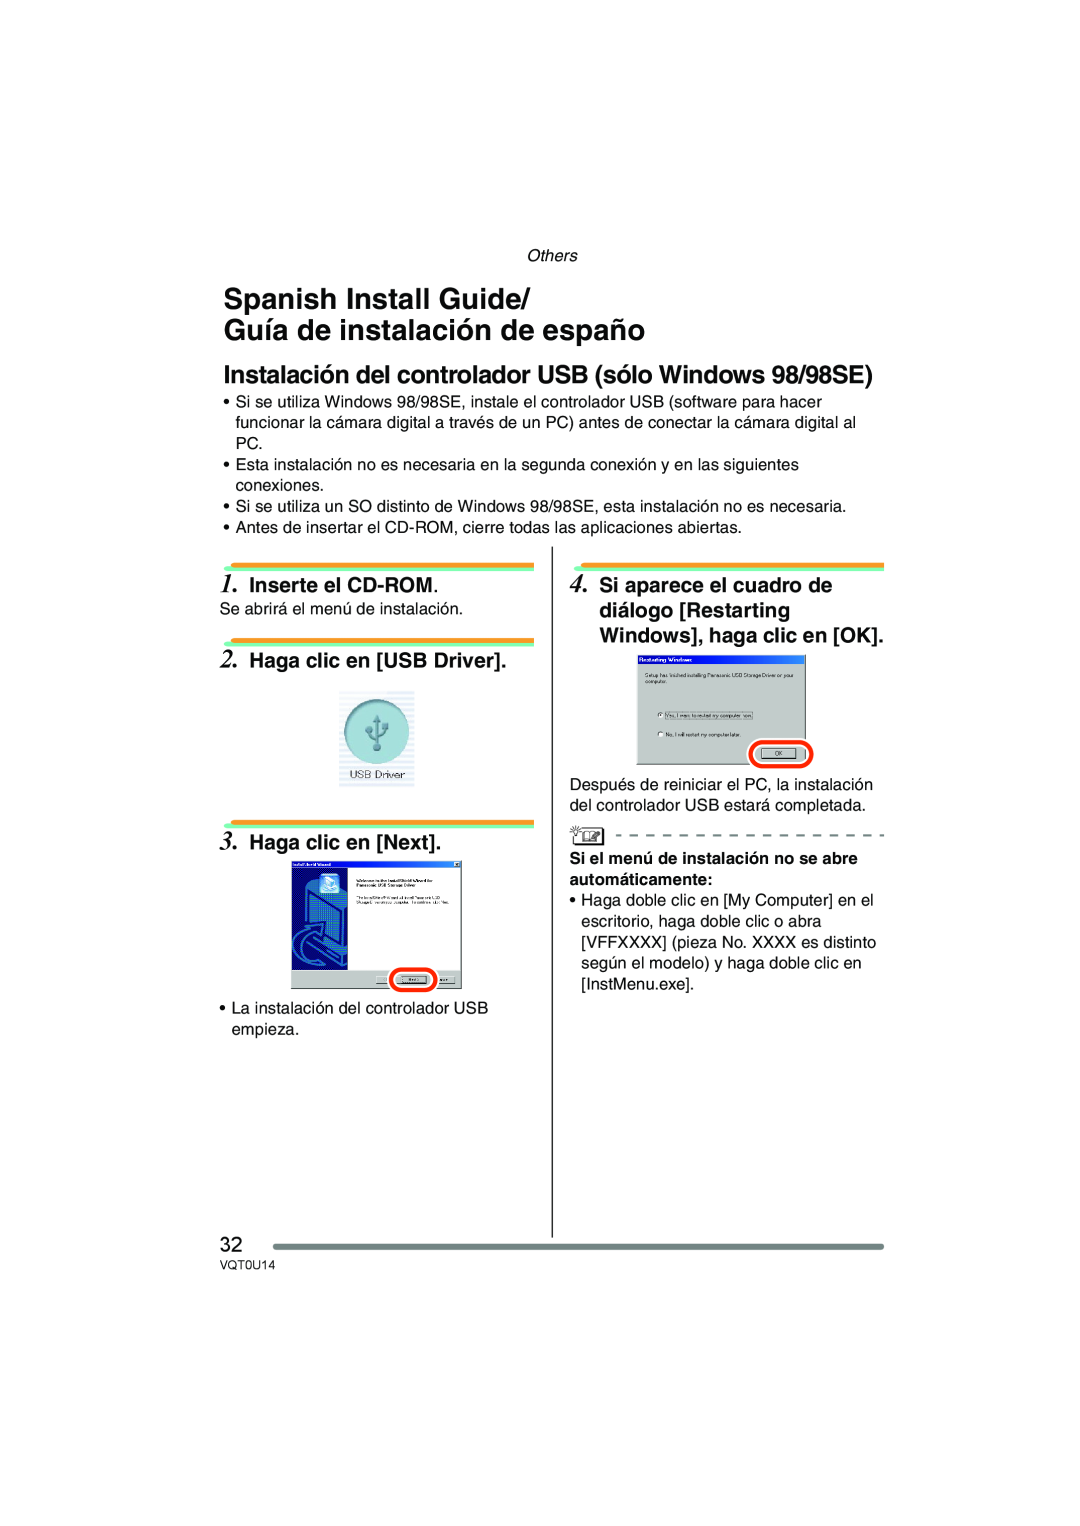 Panasonic VQT0U14 operating instructions Spanish Install Guide Guía de instalación de españo, Inserte el CD-ROM 